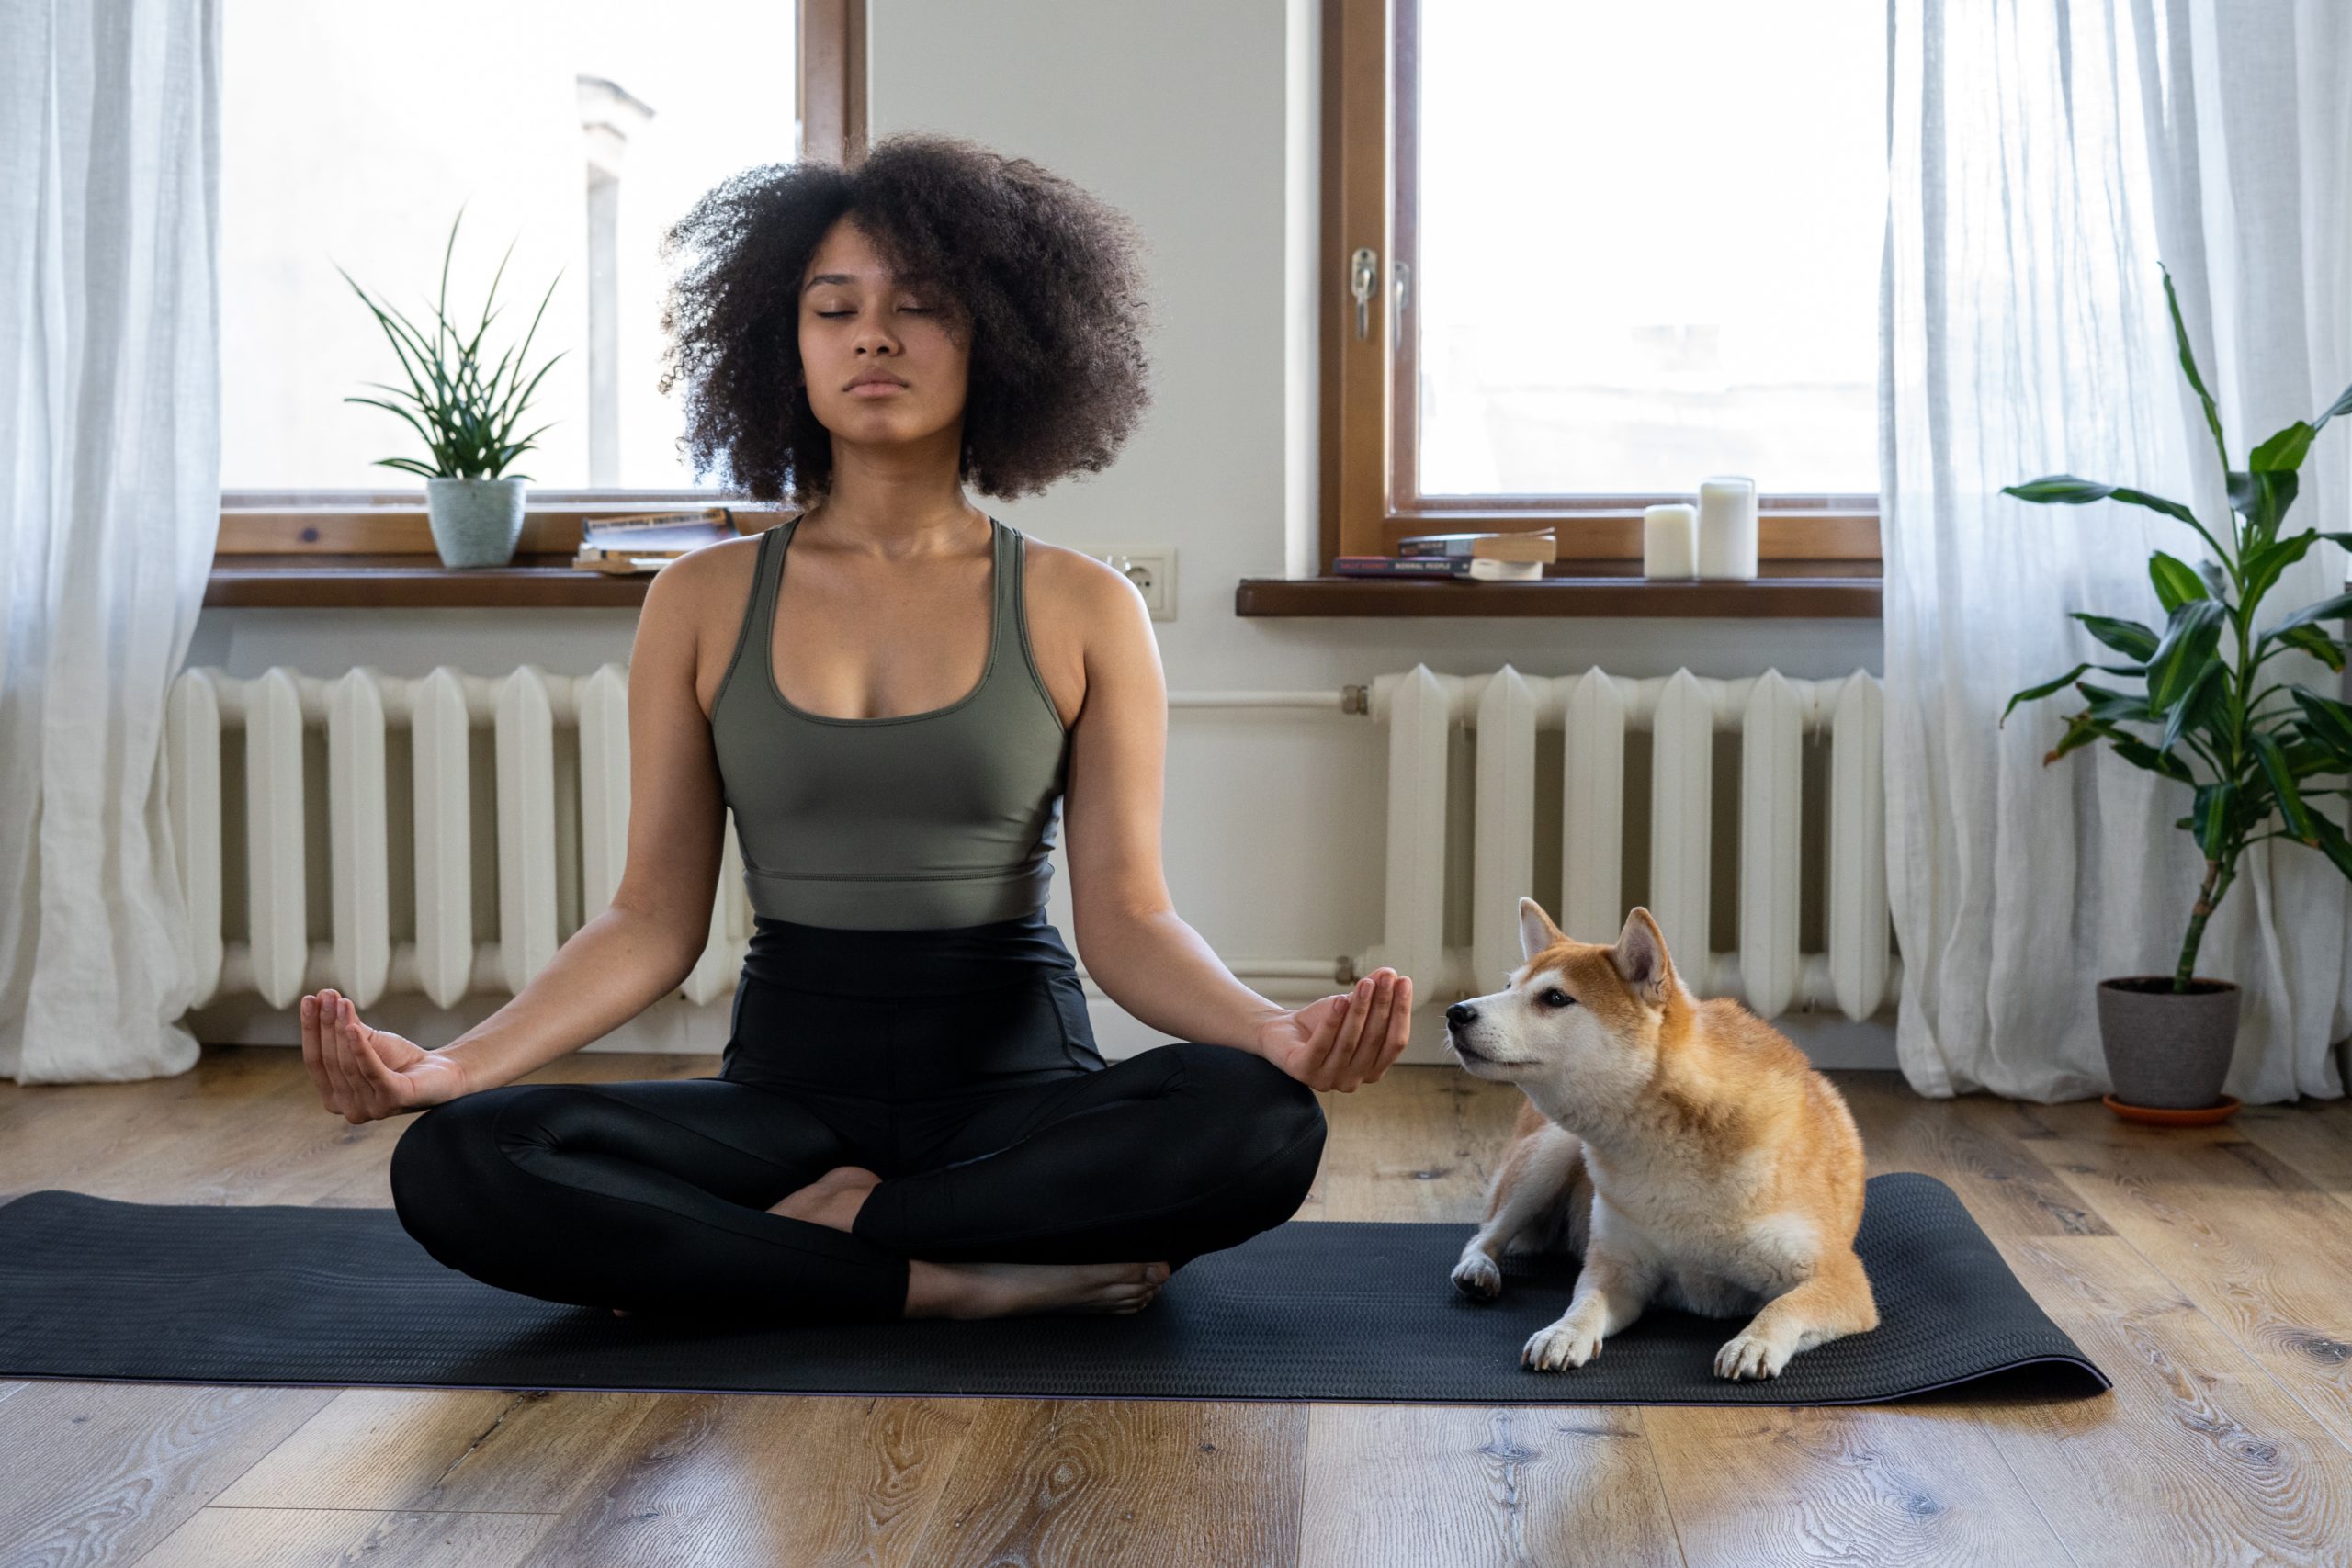 Woman with an afro meditating on a yoga mat beside an akita inu dog